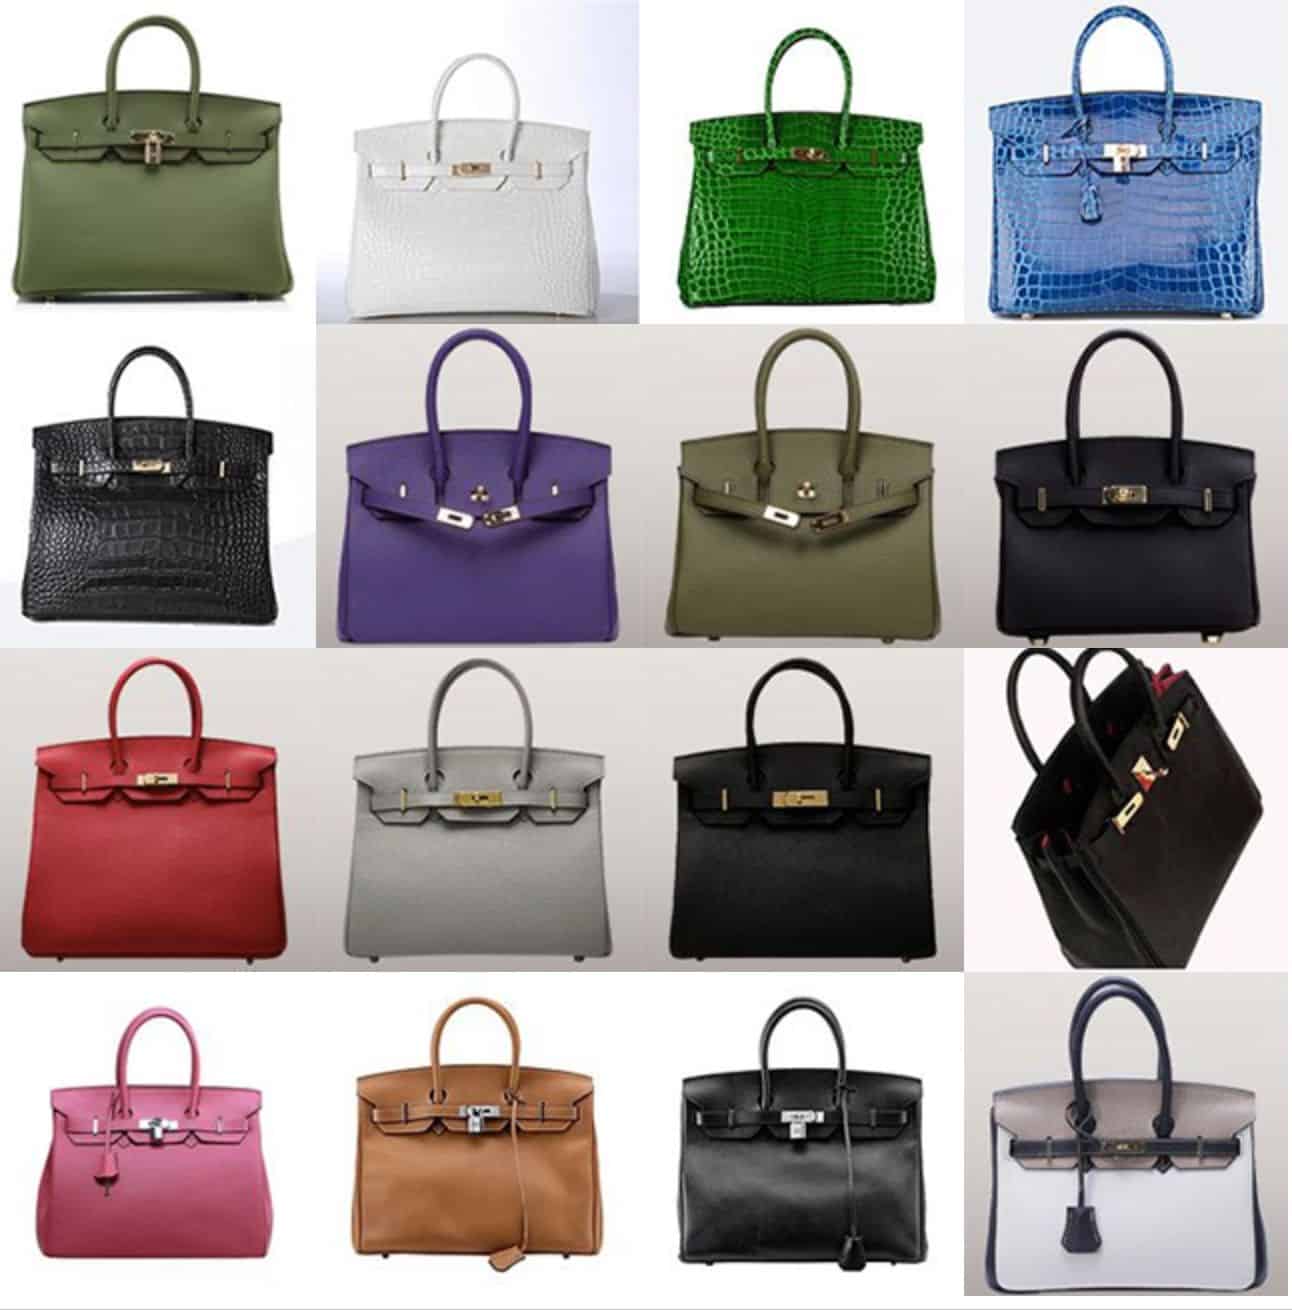 Where To Buy Ainifeel Bag?